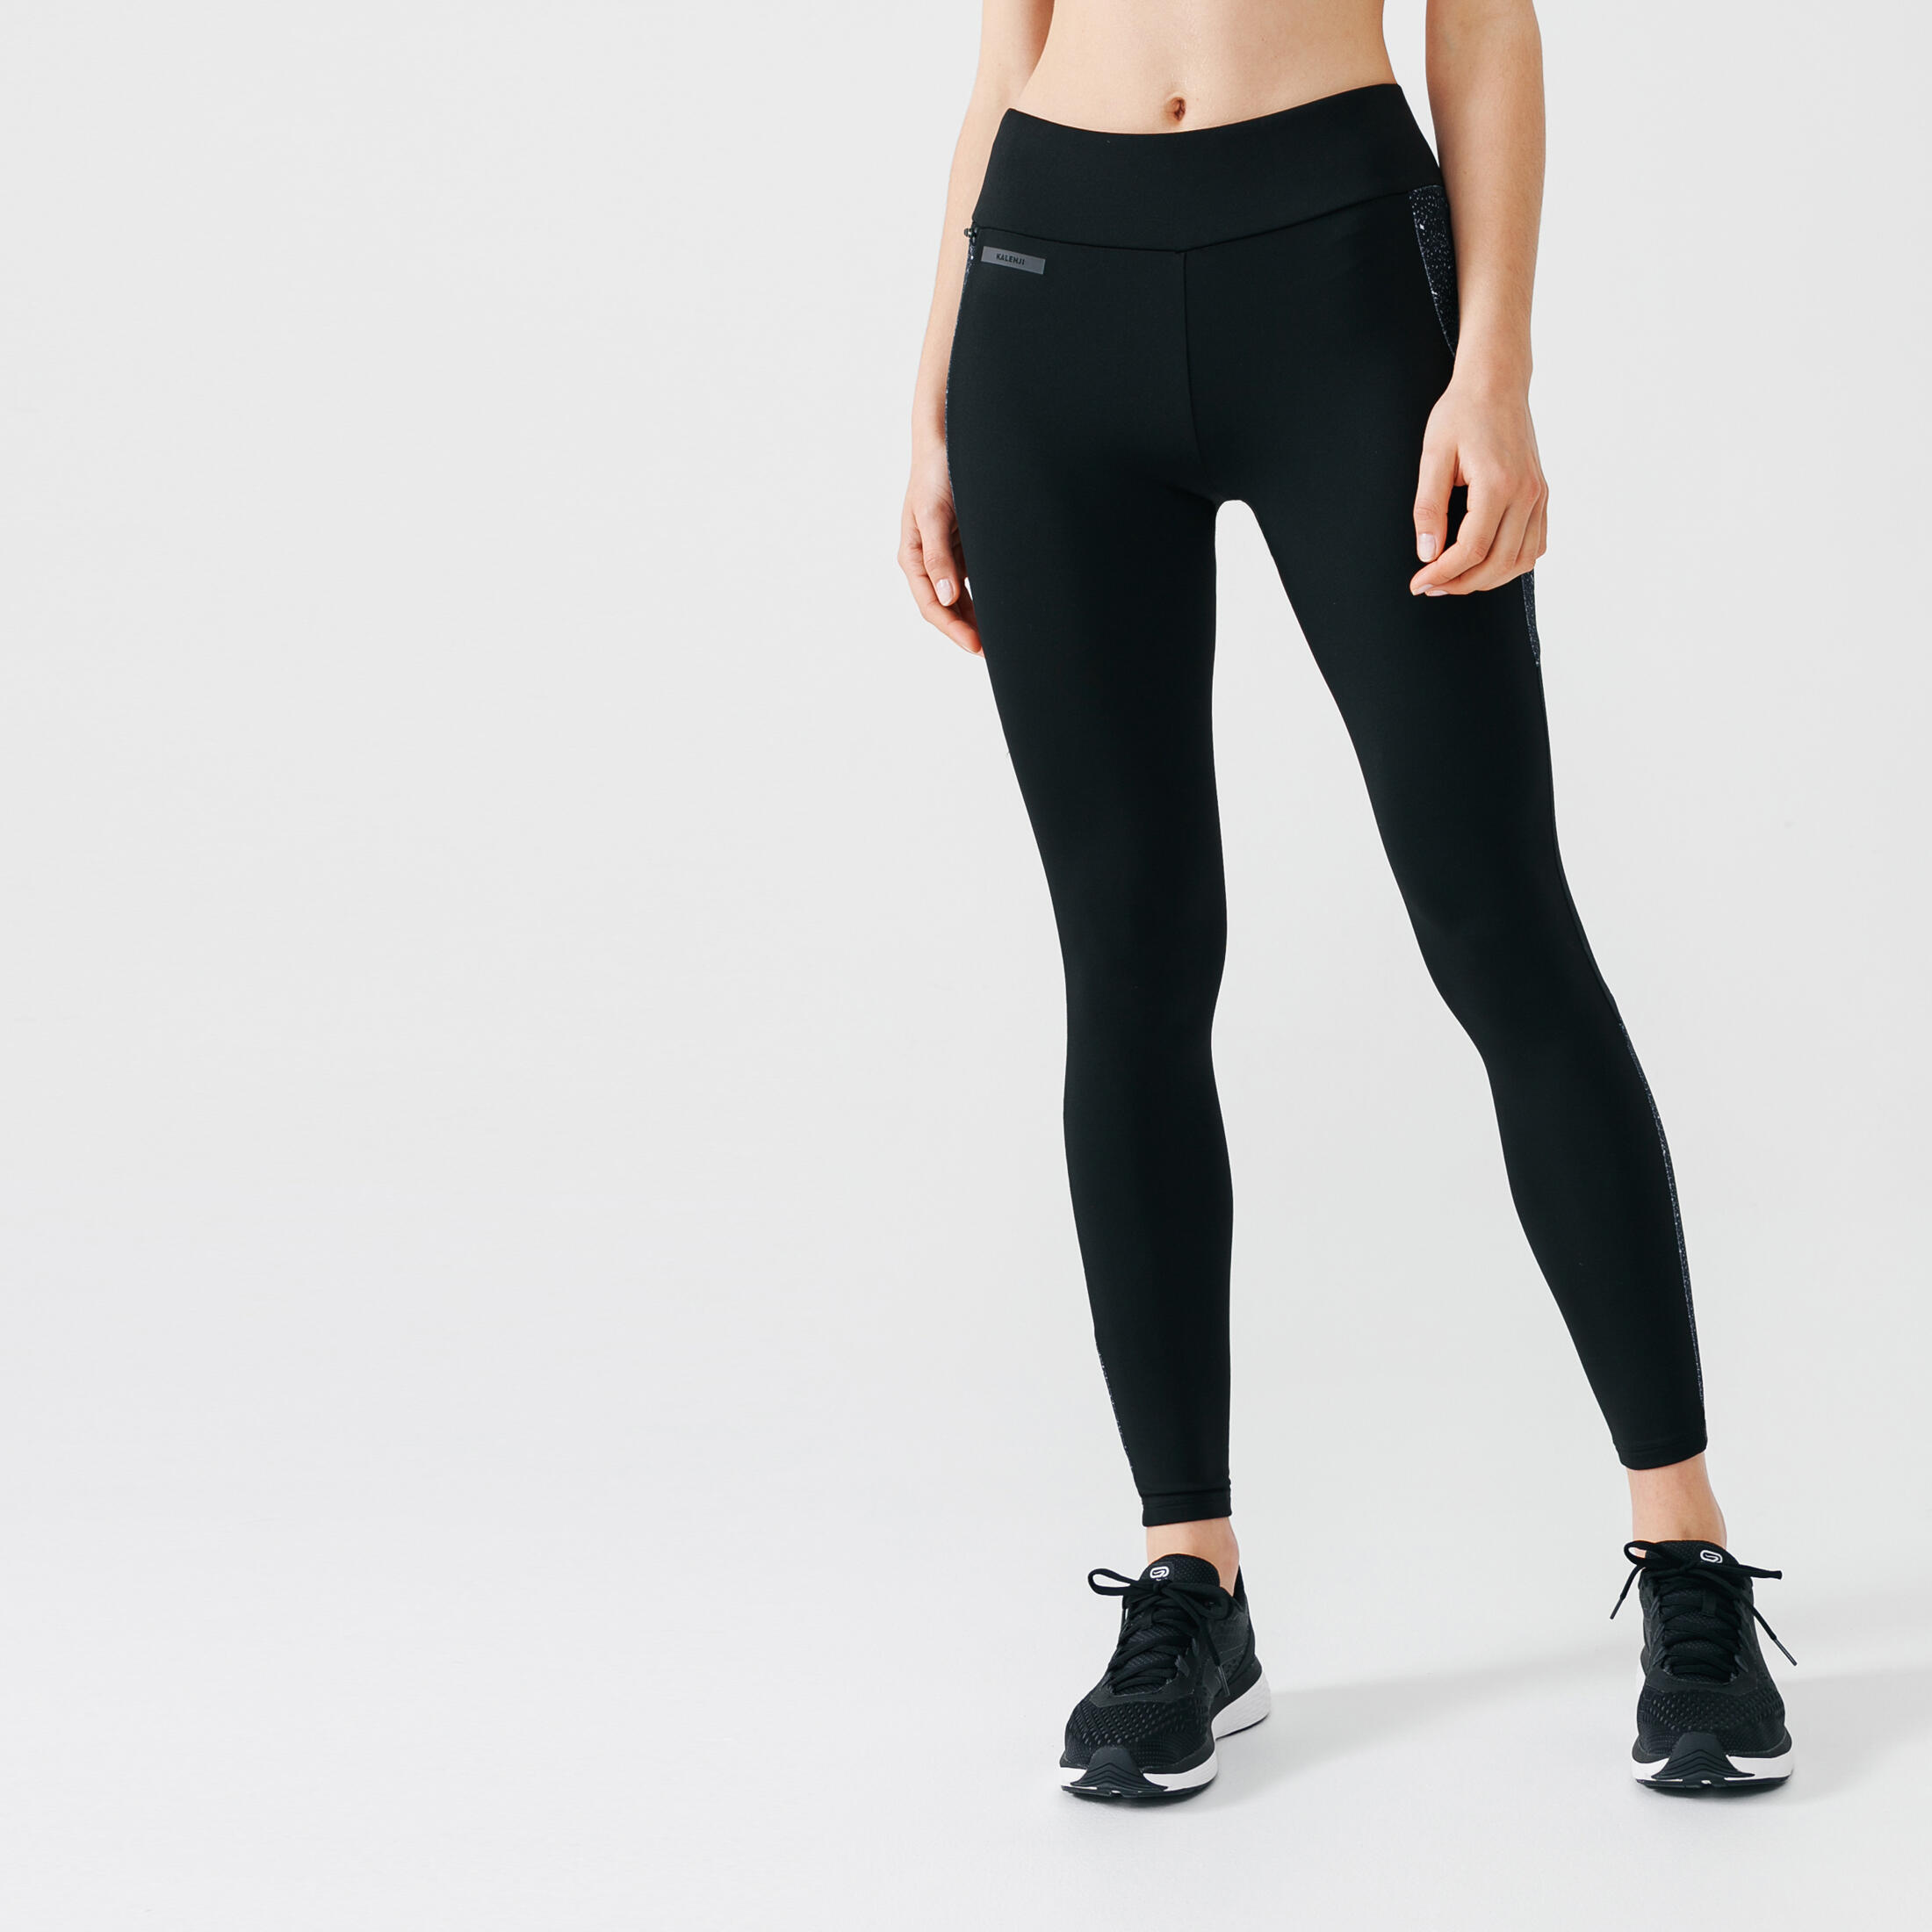 Women's Long Running Leggings - Warm+ Black/Grey - Black, Black